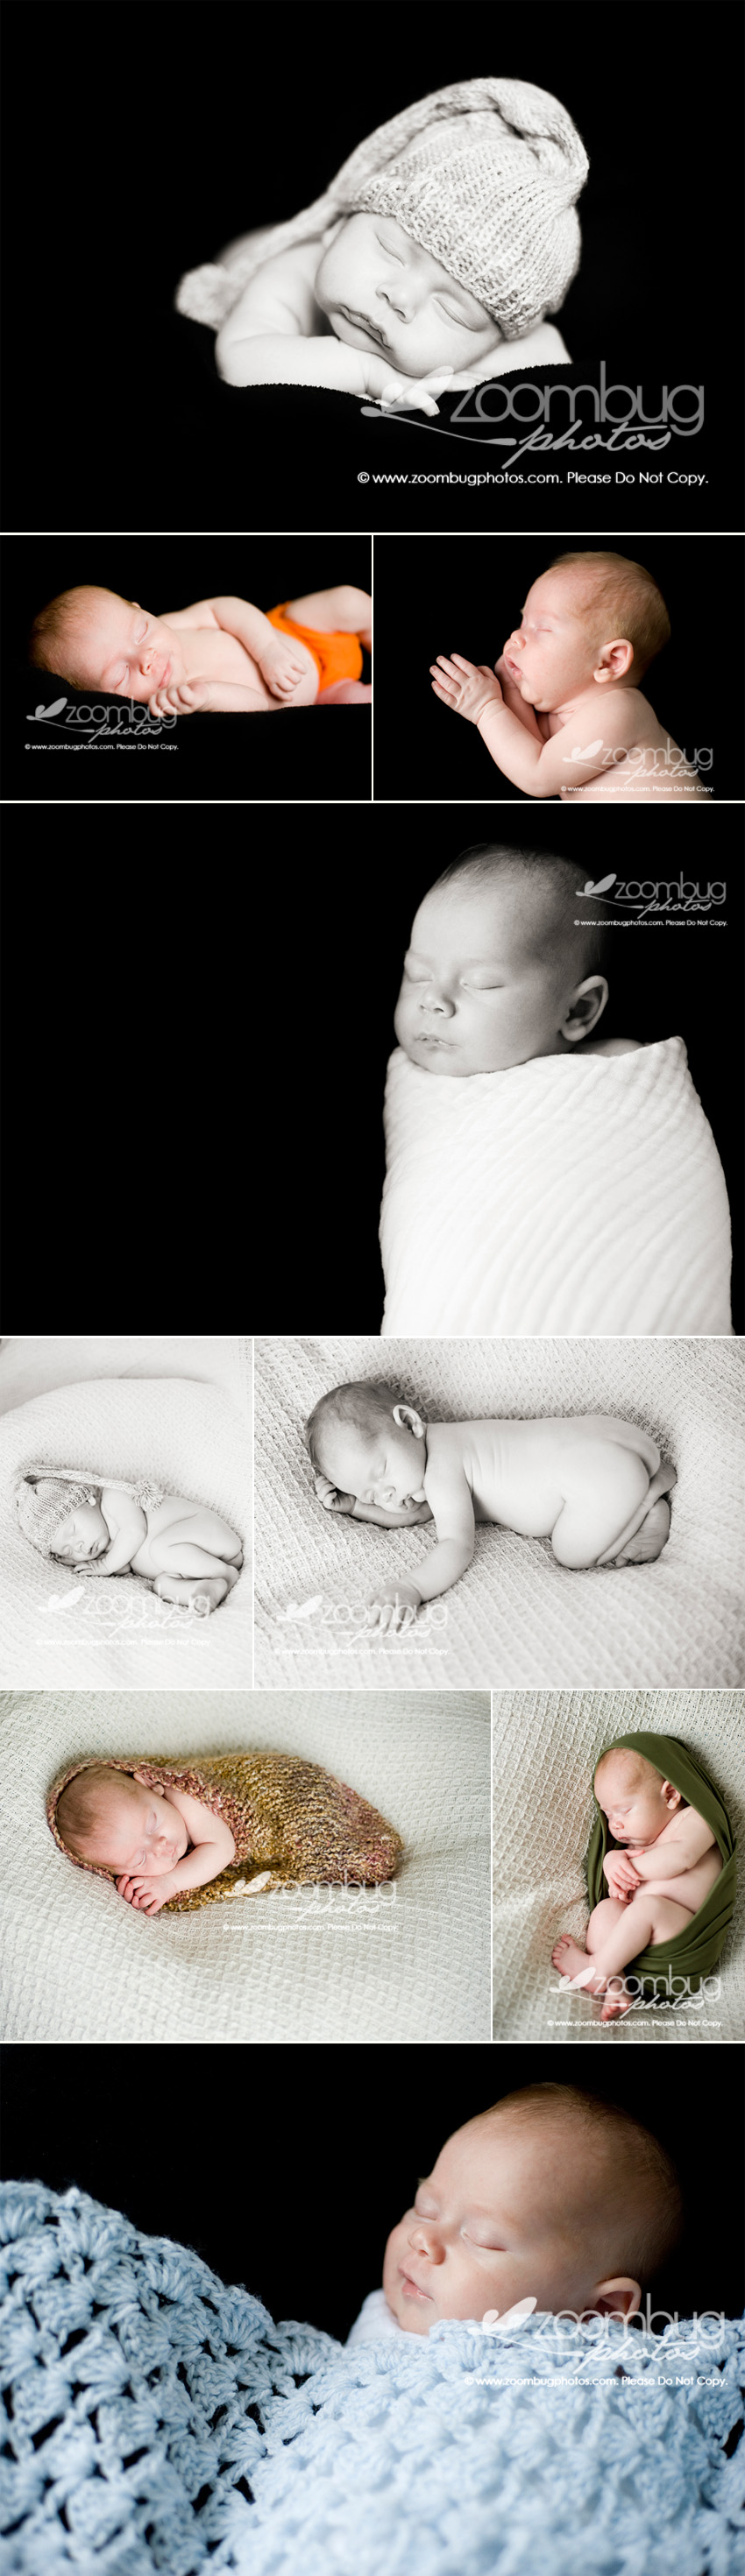 newborn-kiddo-boy-pix